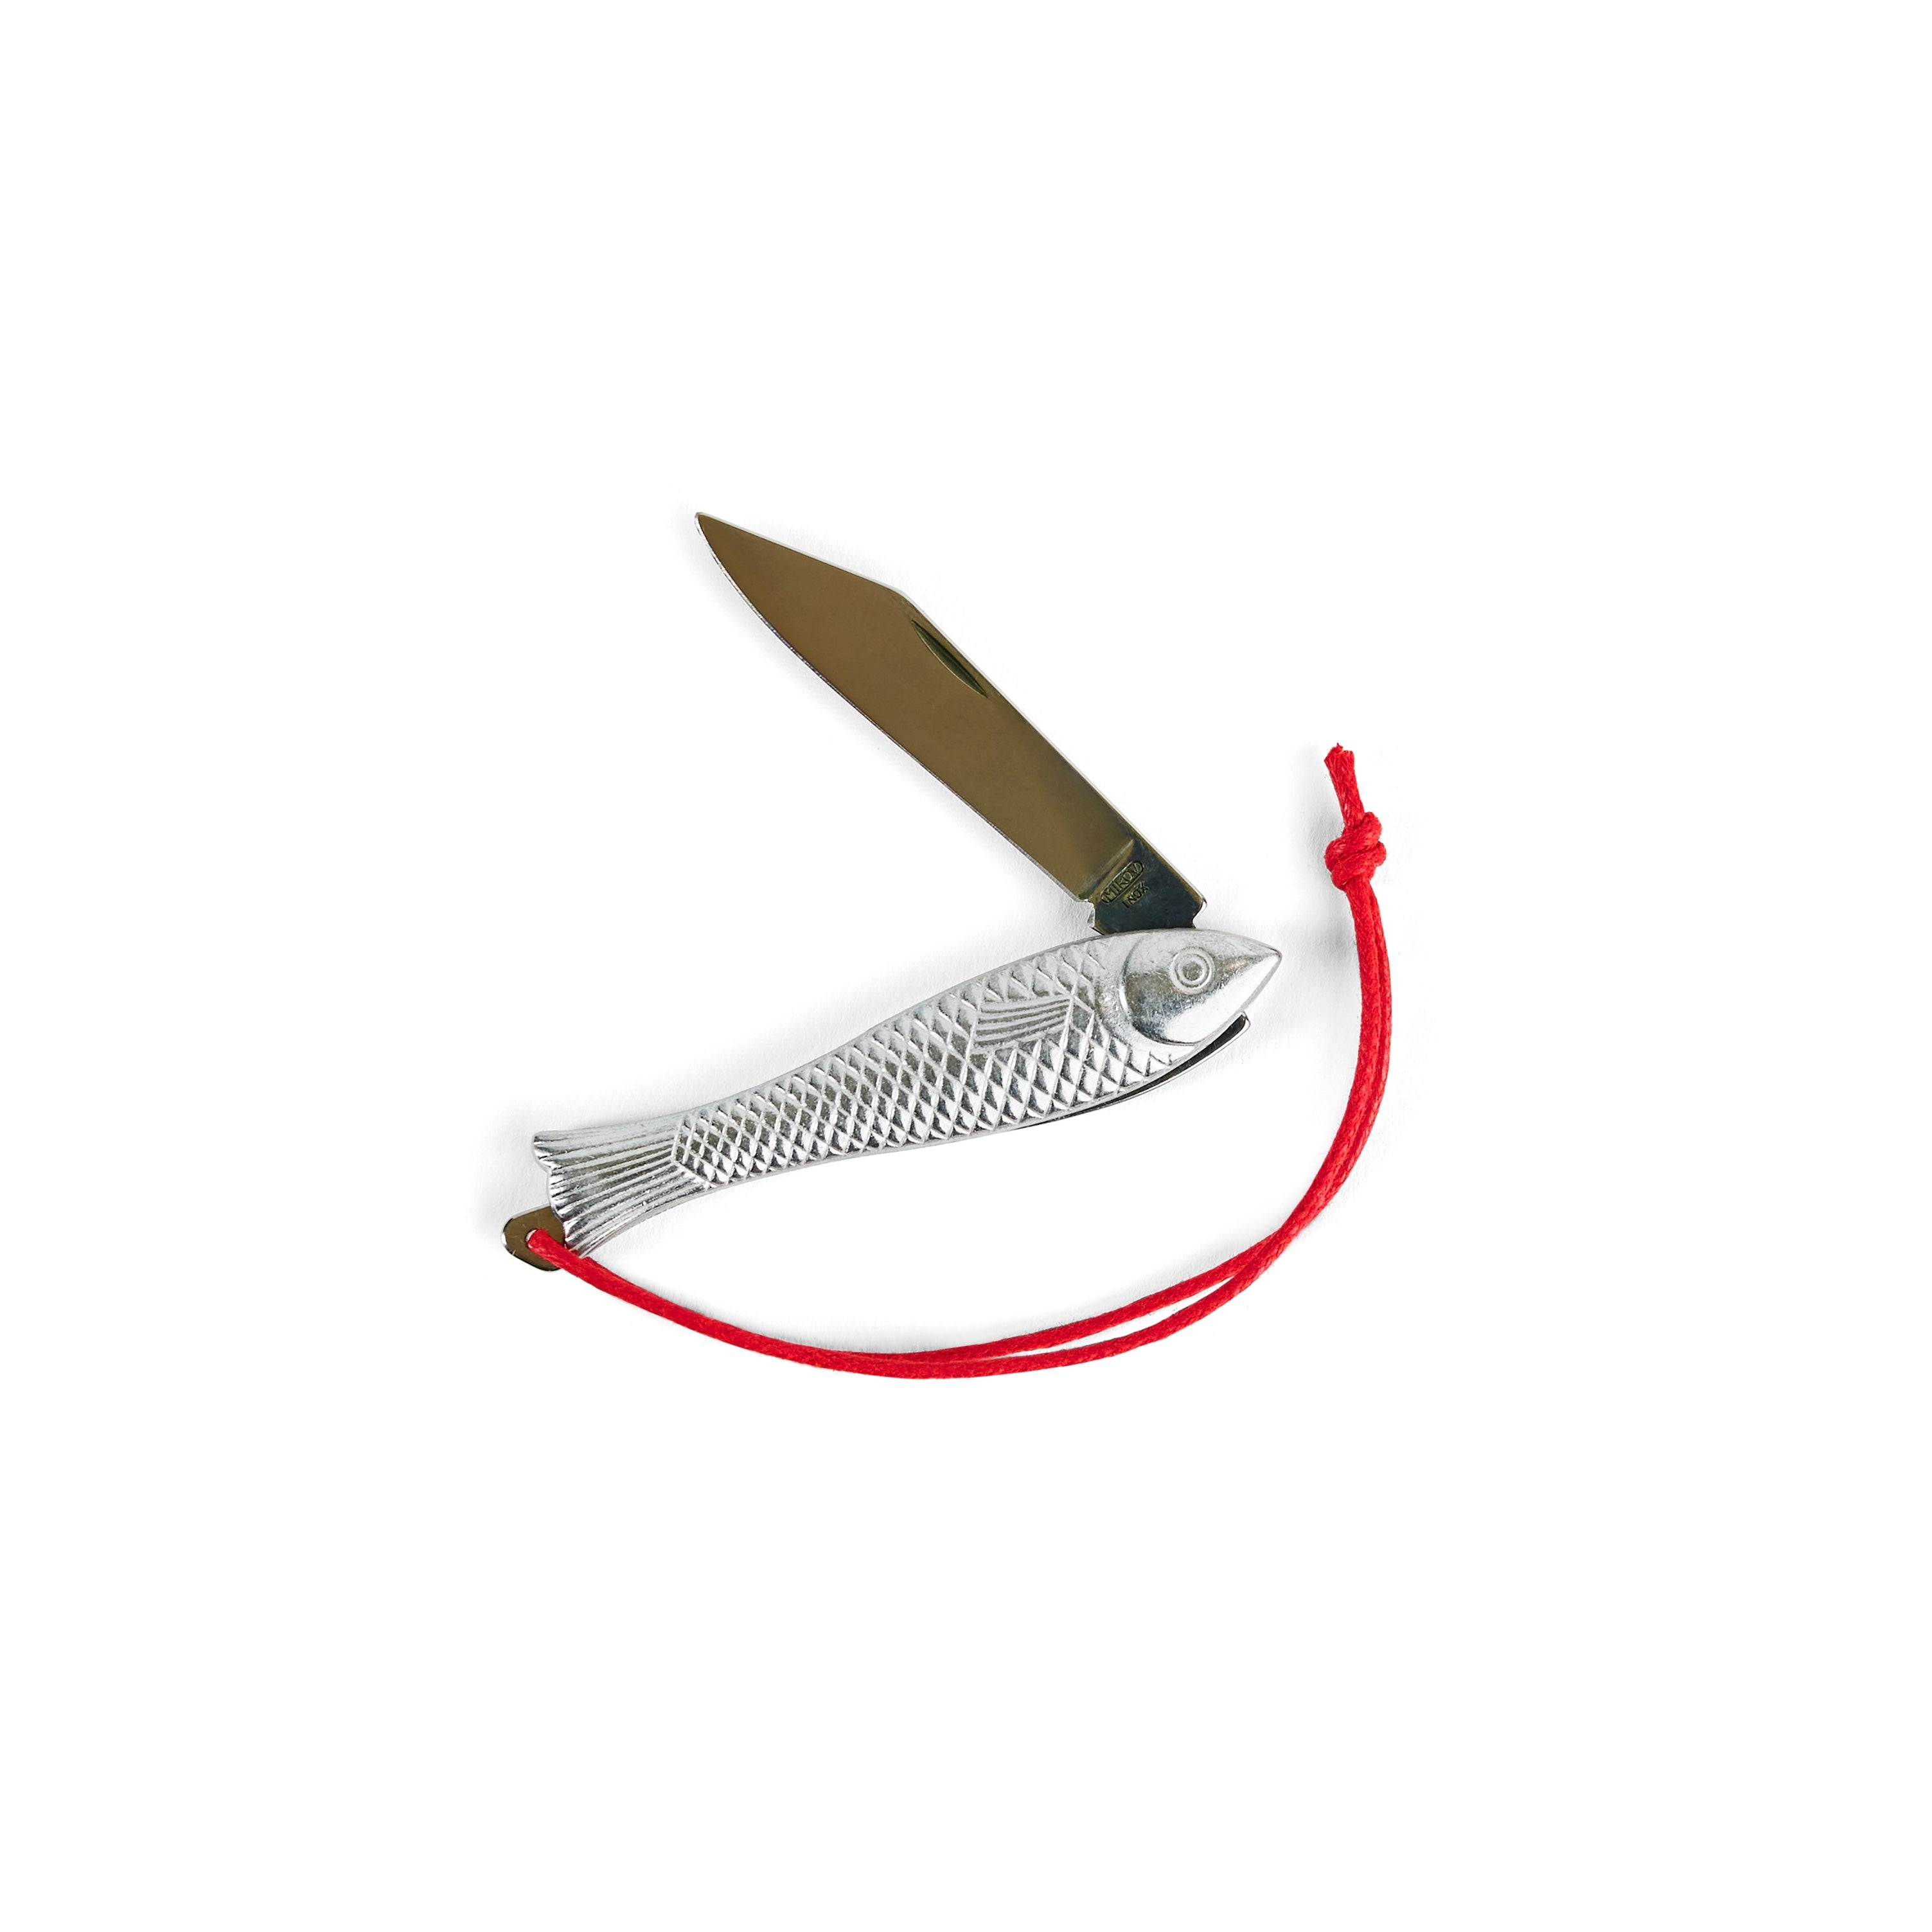 Authenticity Guaranteed Fingerling Fish Knife – Mollyjogger, fish shaped  pocket knife